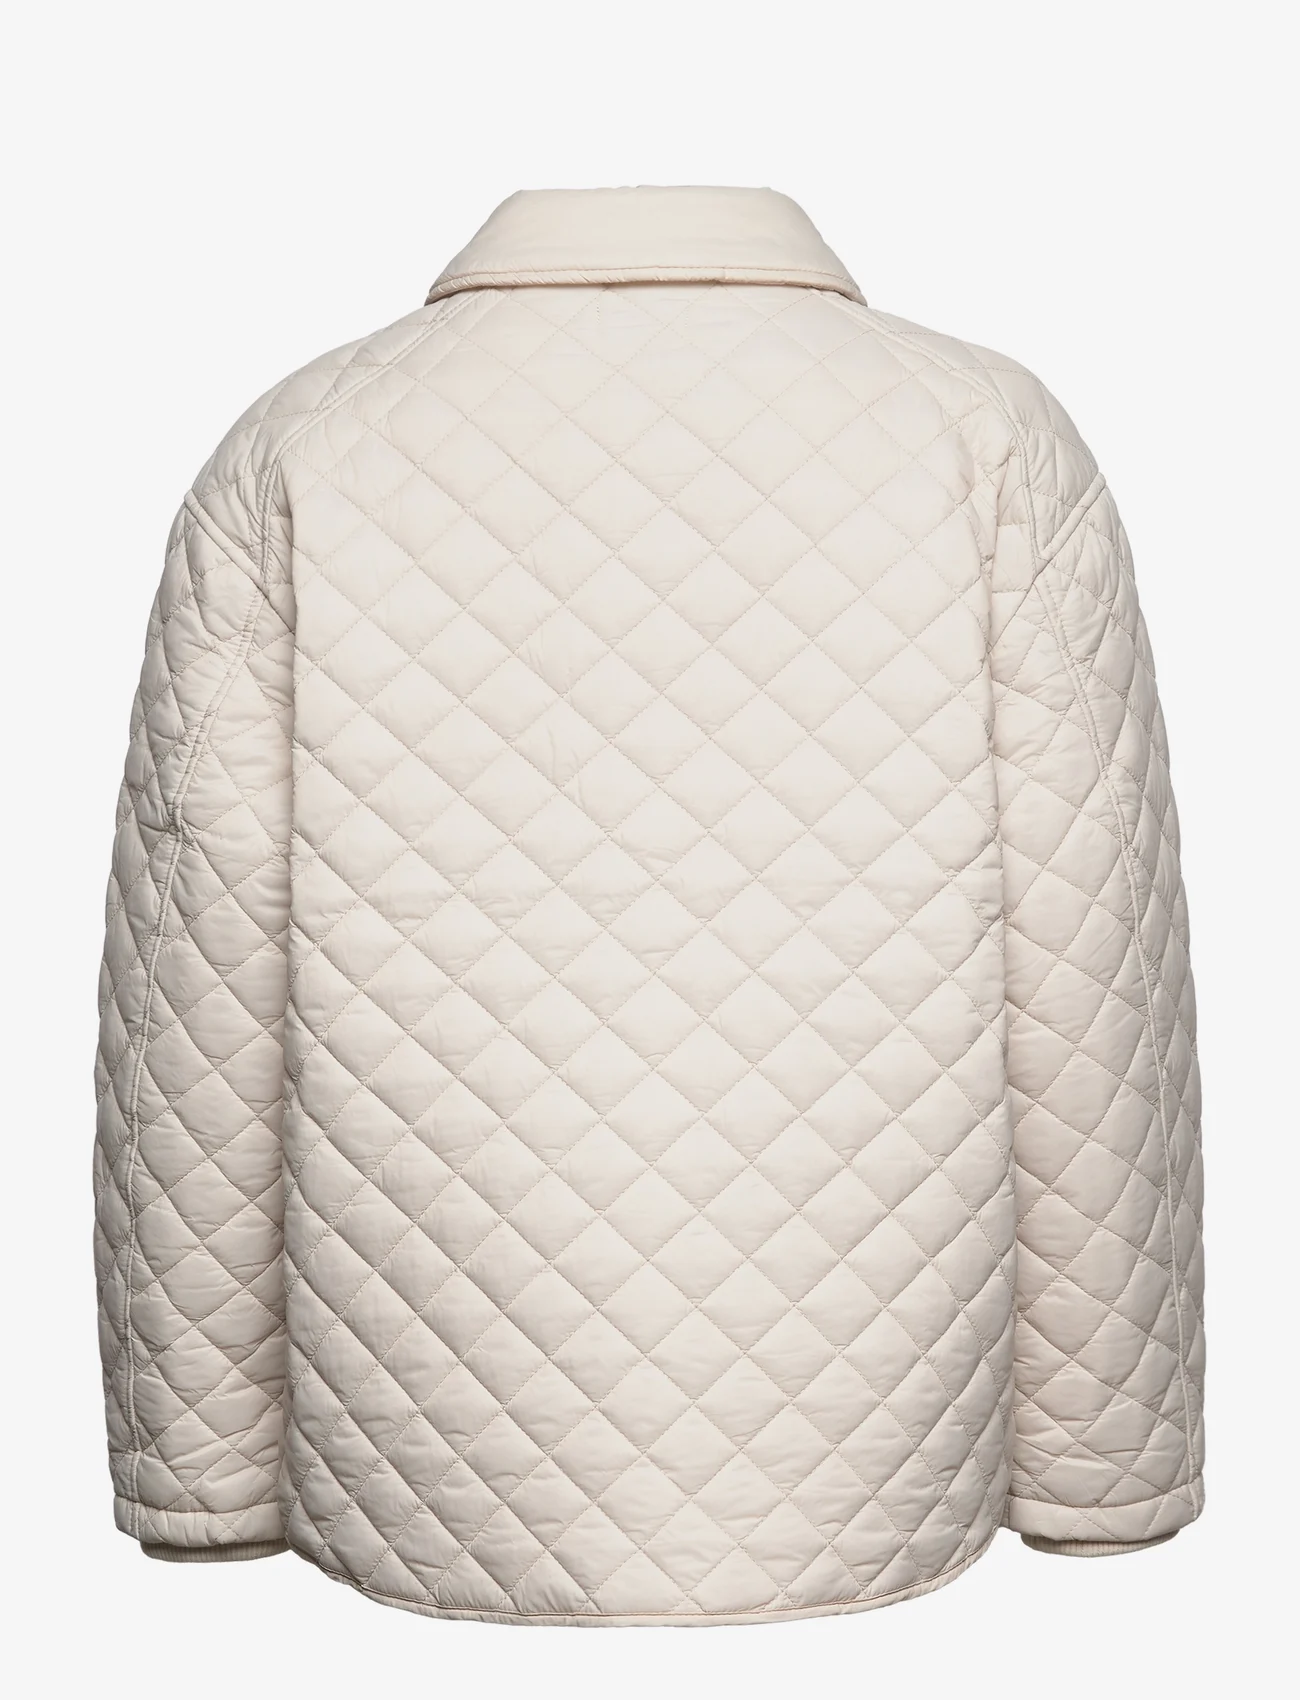 Esprit Collection - Jackets outdoor woven - vårjackor - ice - 1